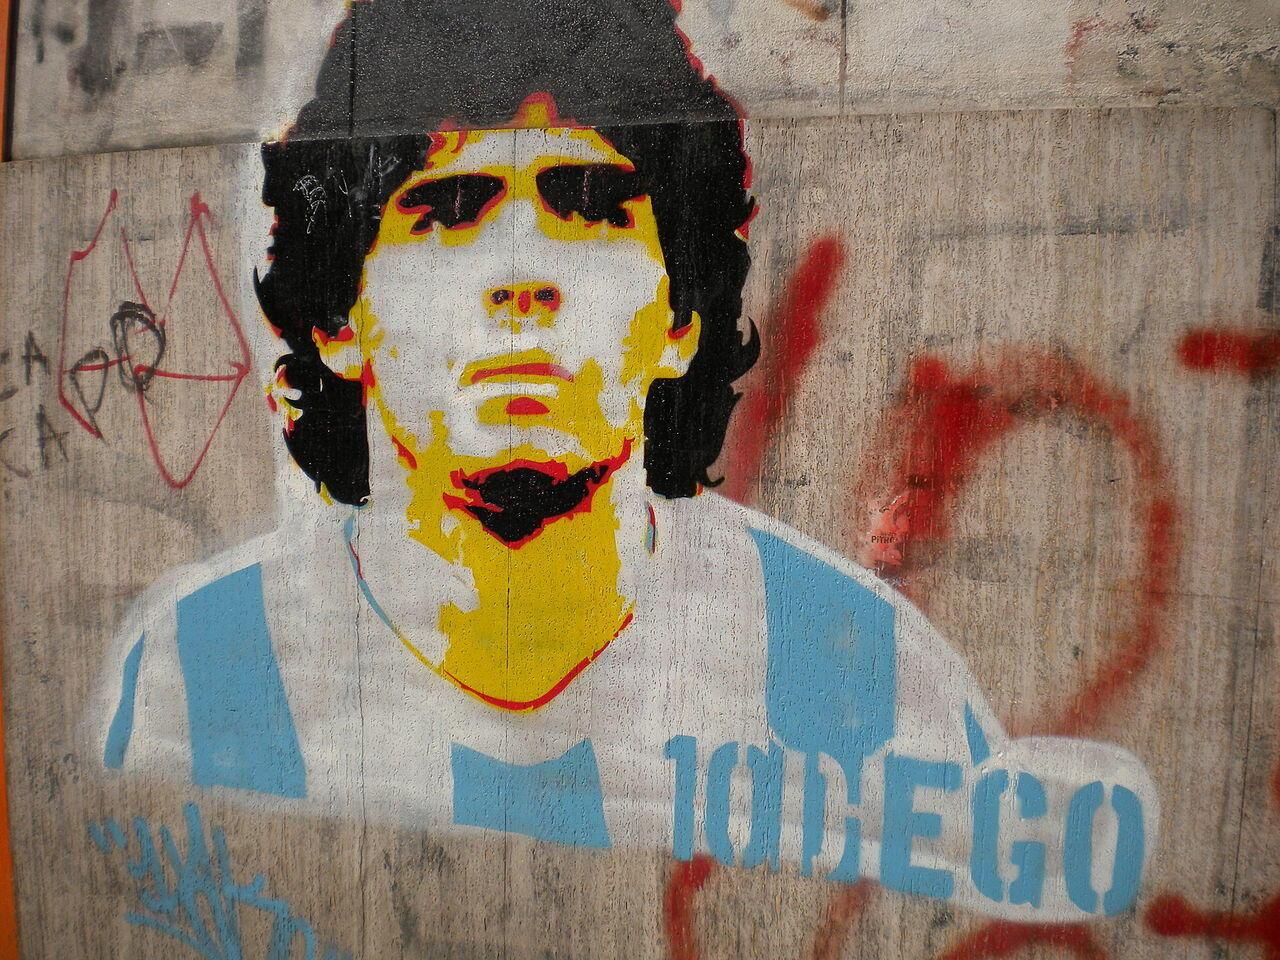 Thumbnail for "The Political Legacy of Diego Maradona".